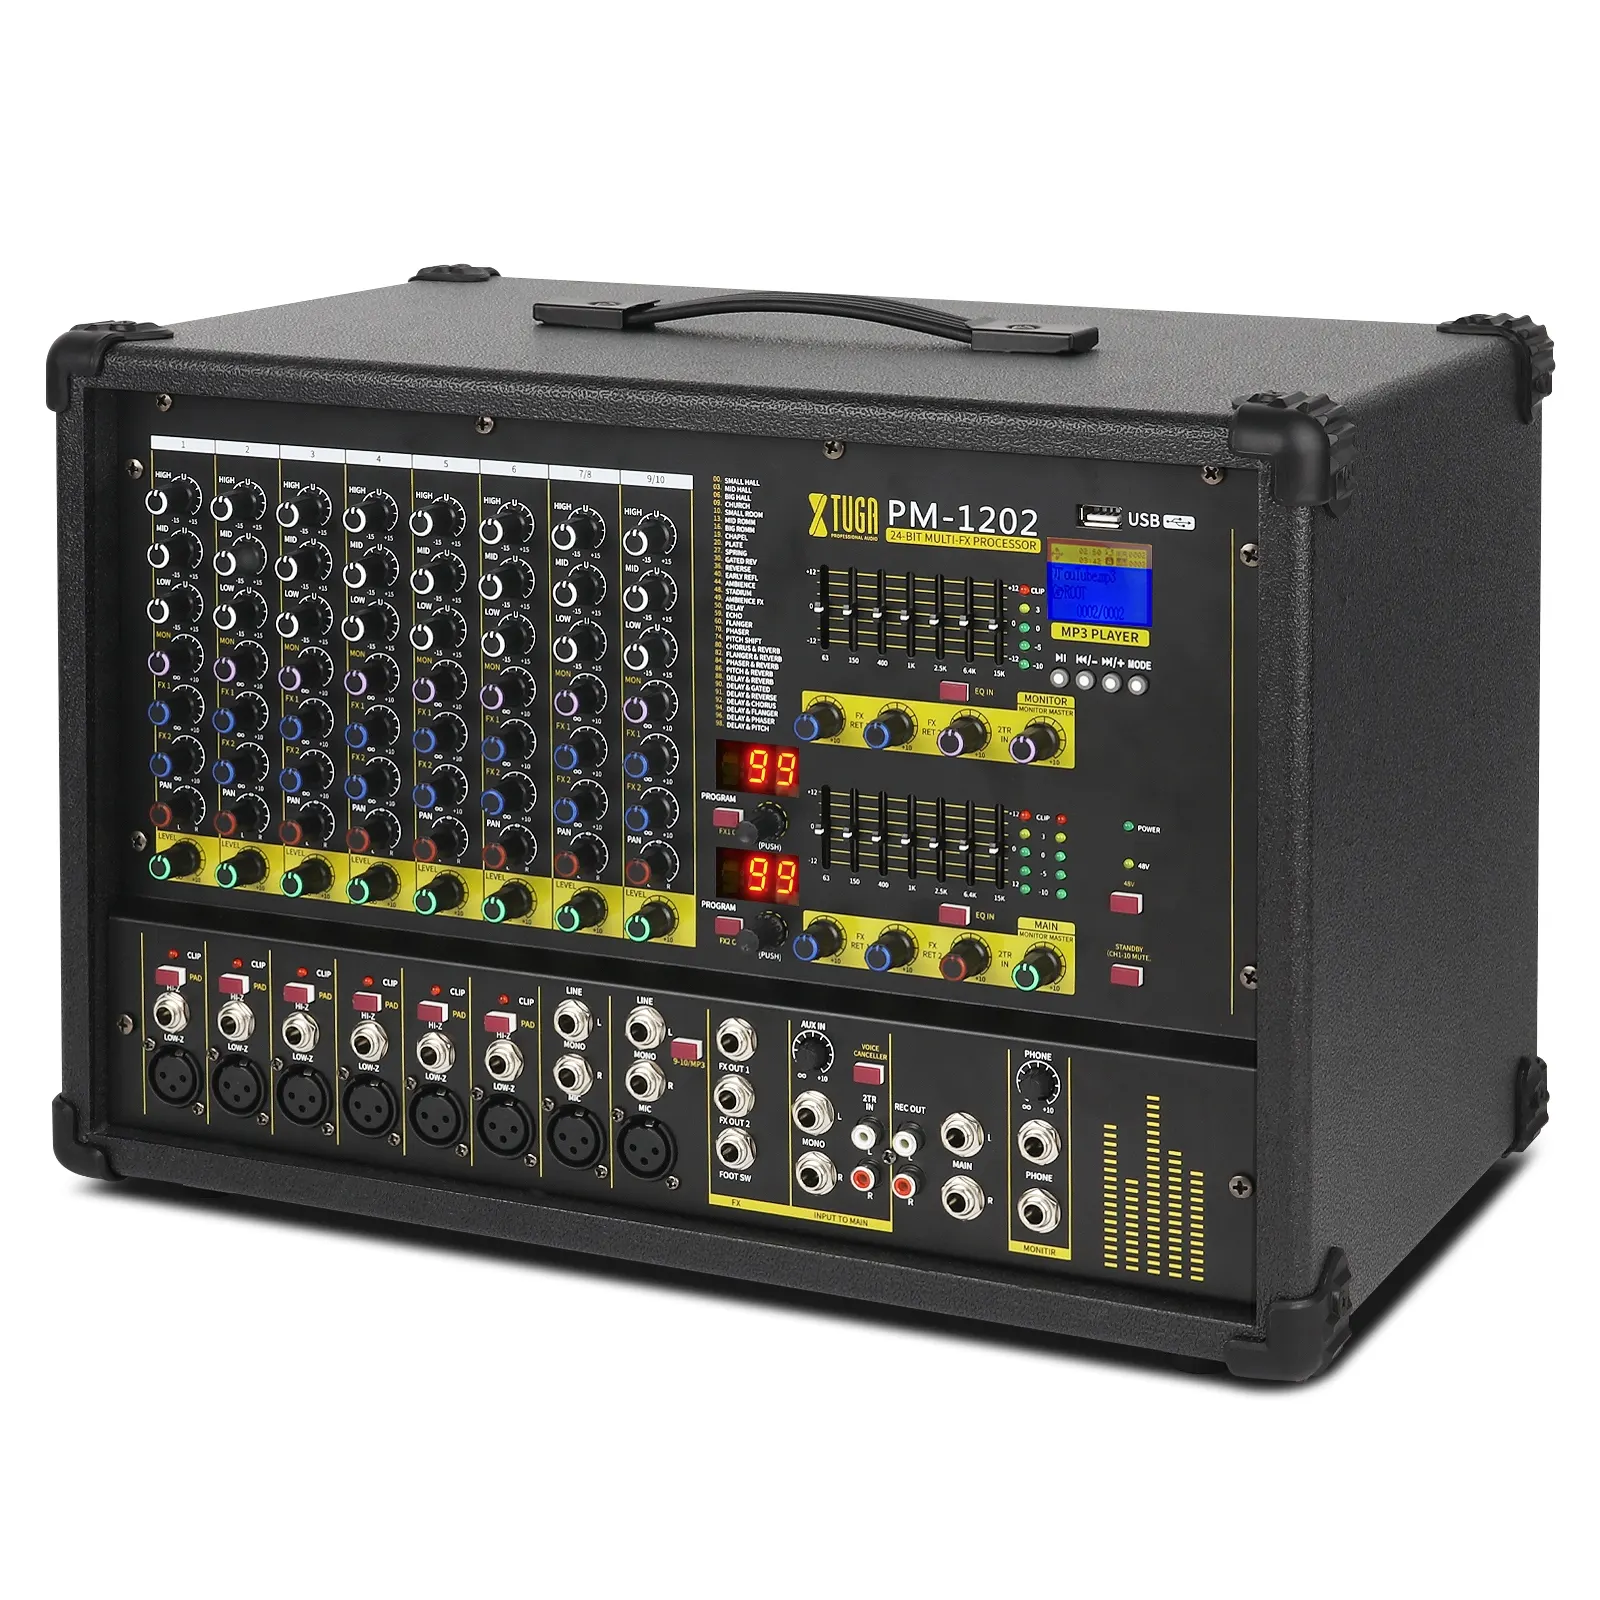 XTUGA PM1202 sistem suara Equalizer bintang 5 Amplifier Mixer Audio profesional 12 saluran Live Karaoke